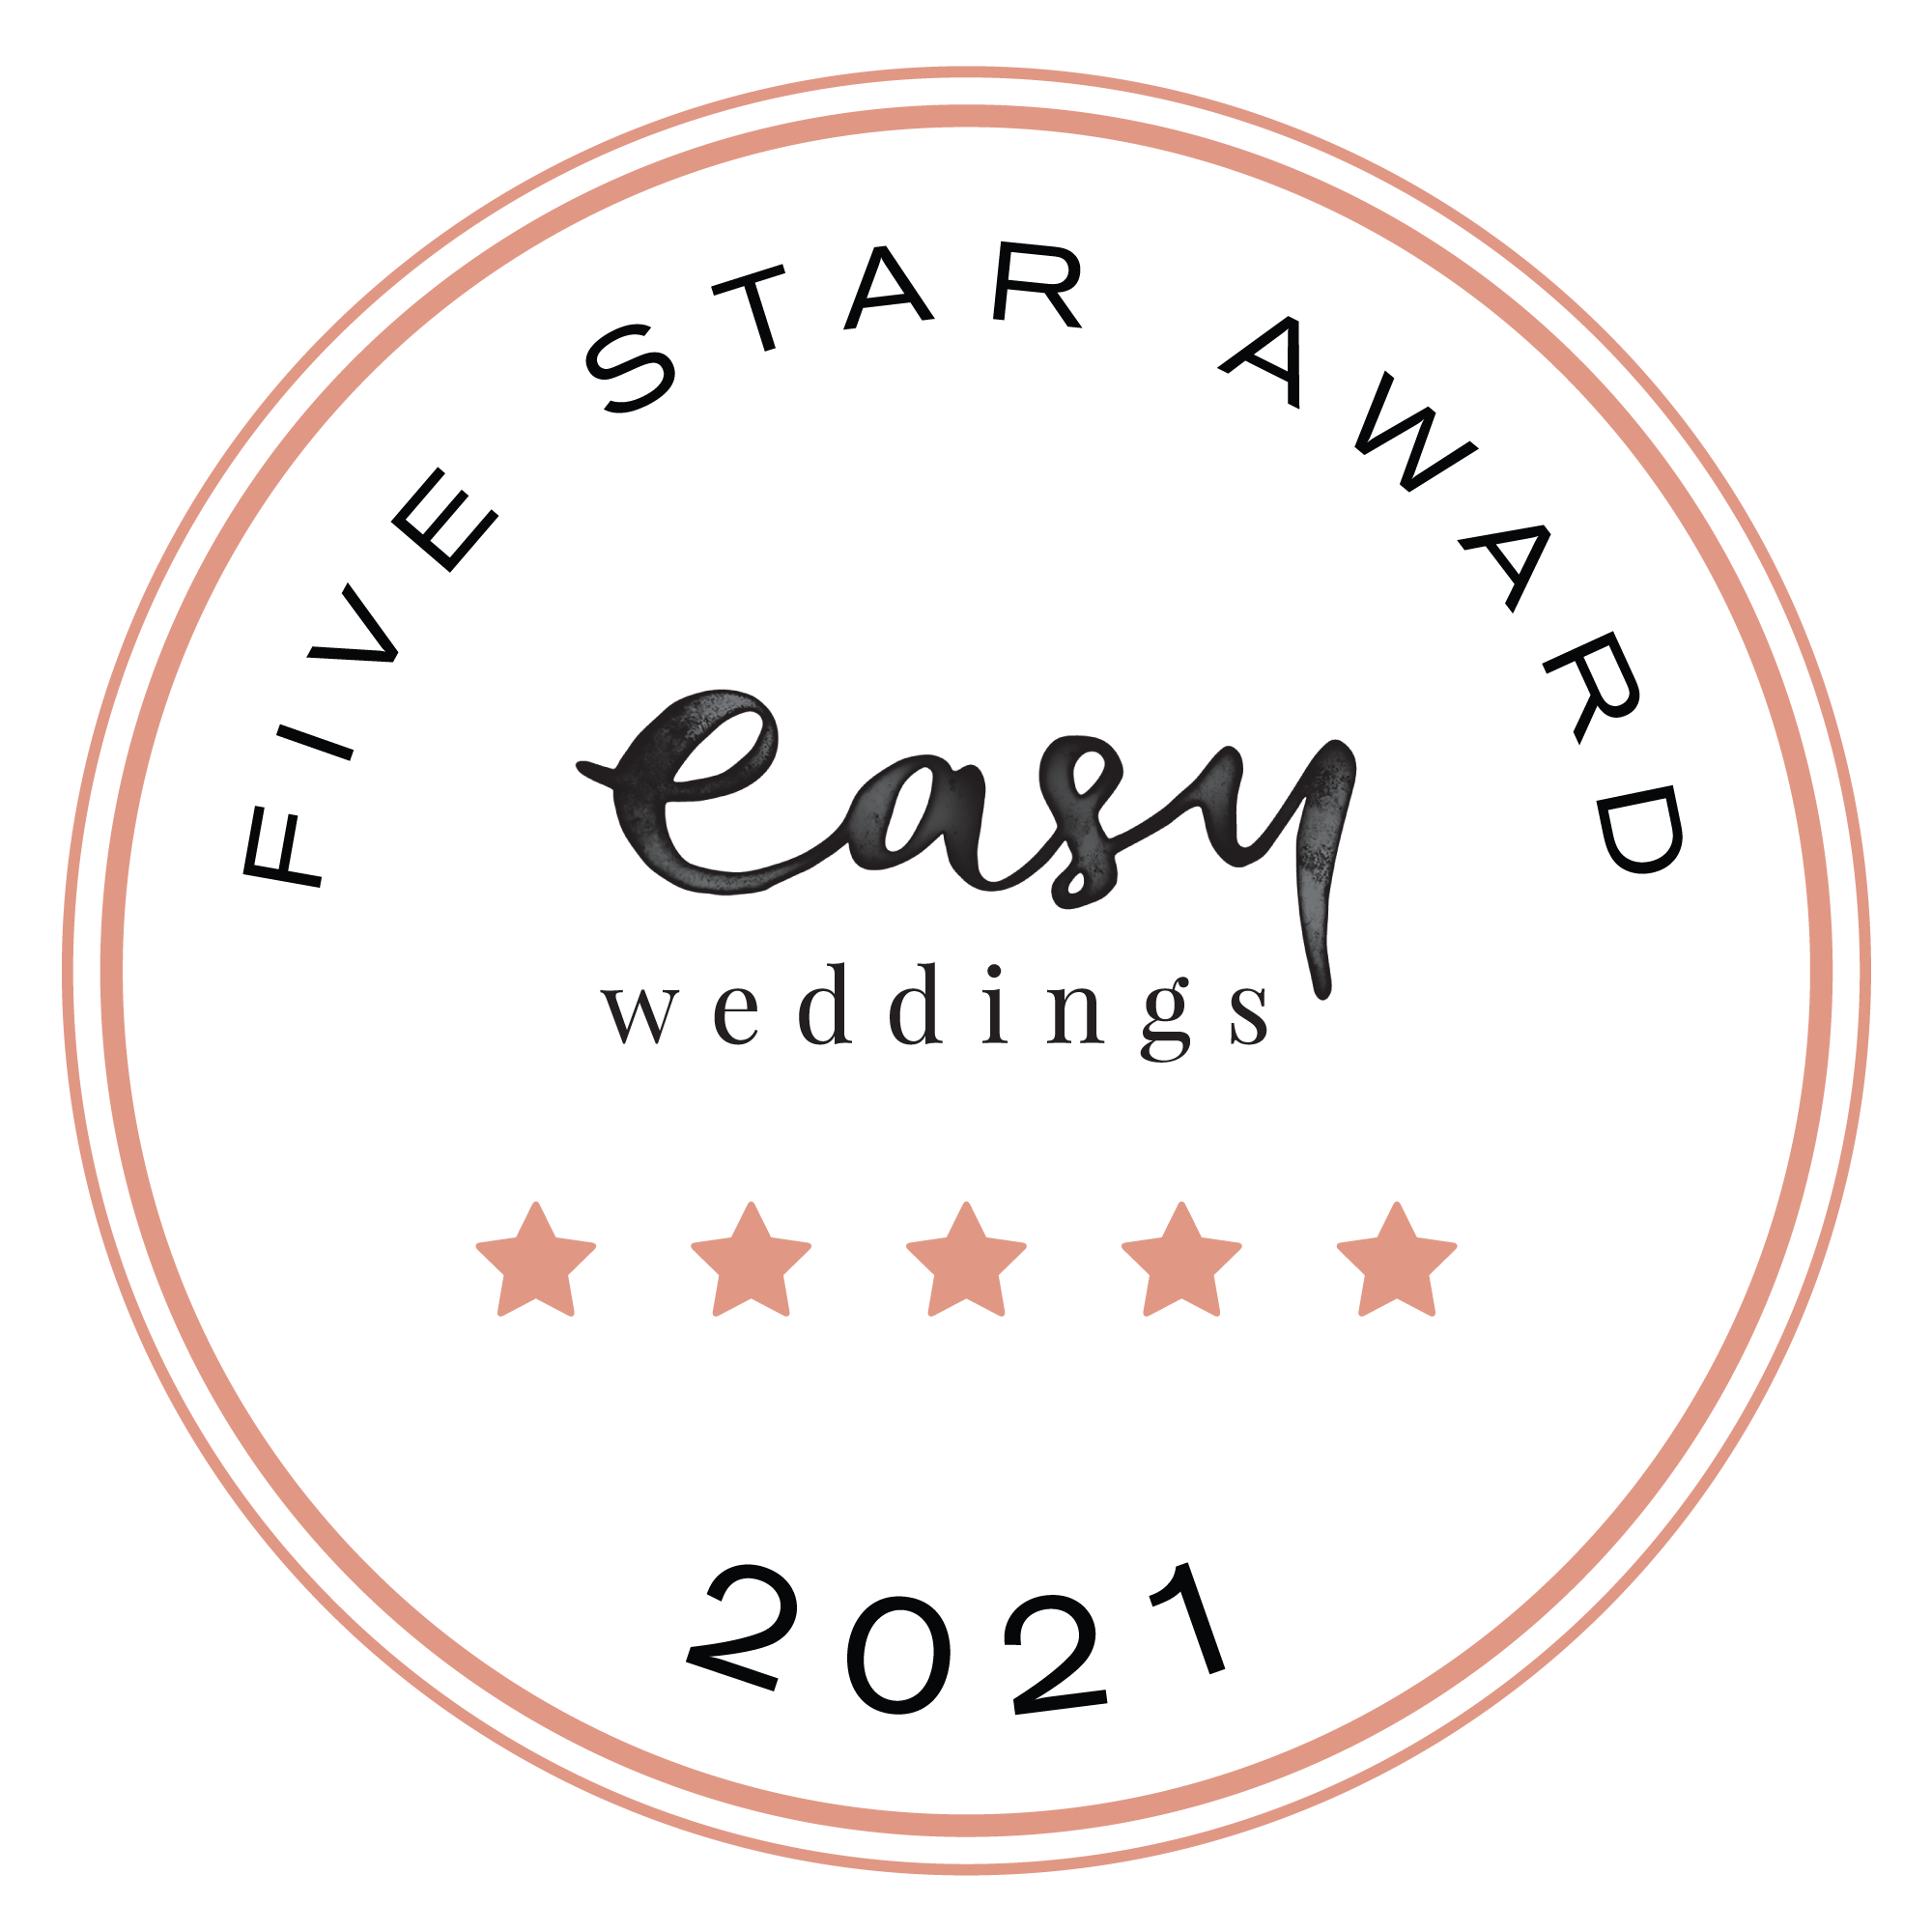 Easy Weddings 5 Star Award 2021